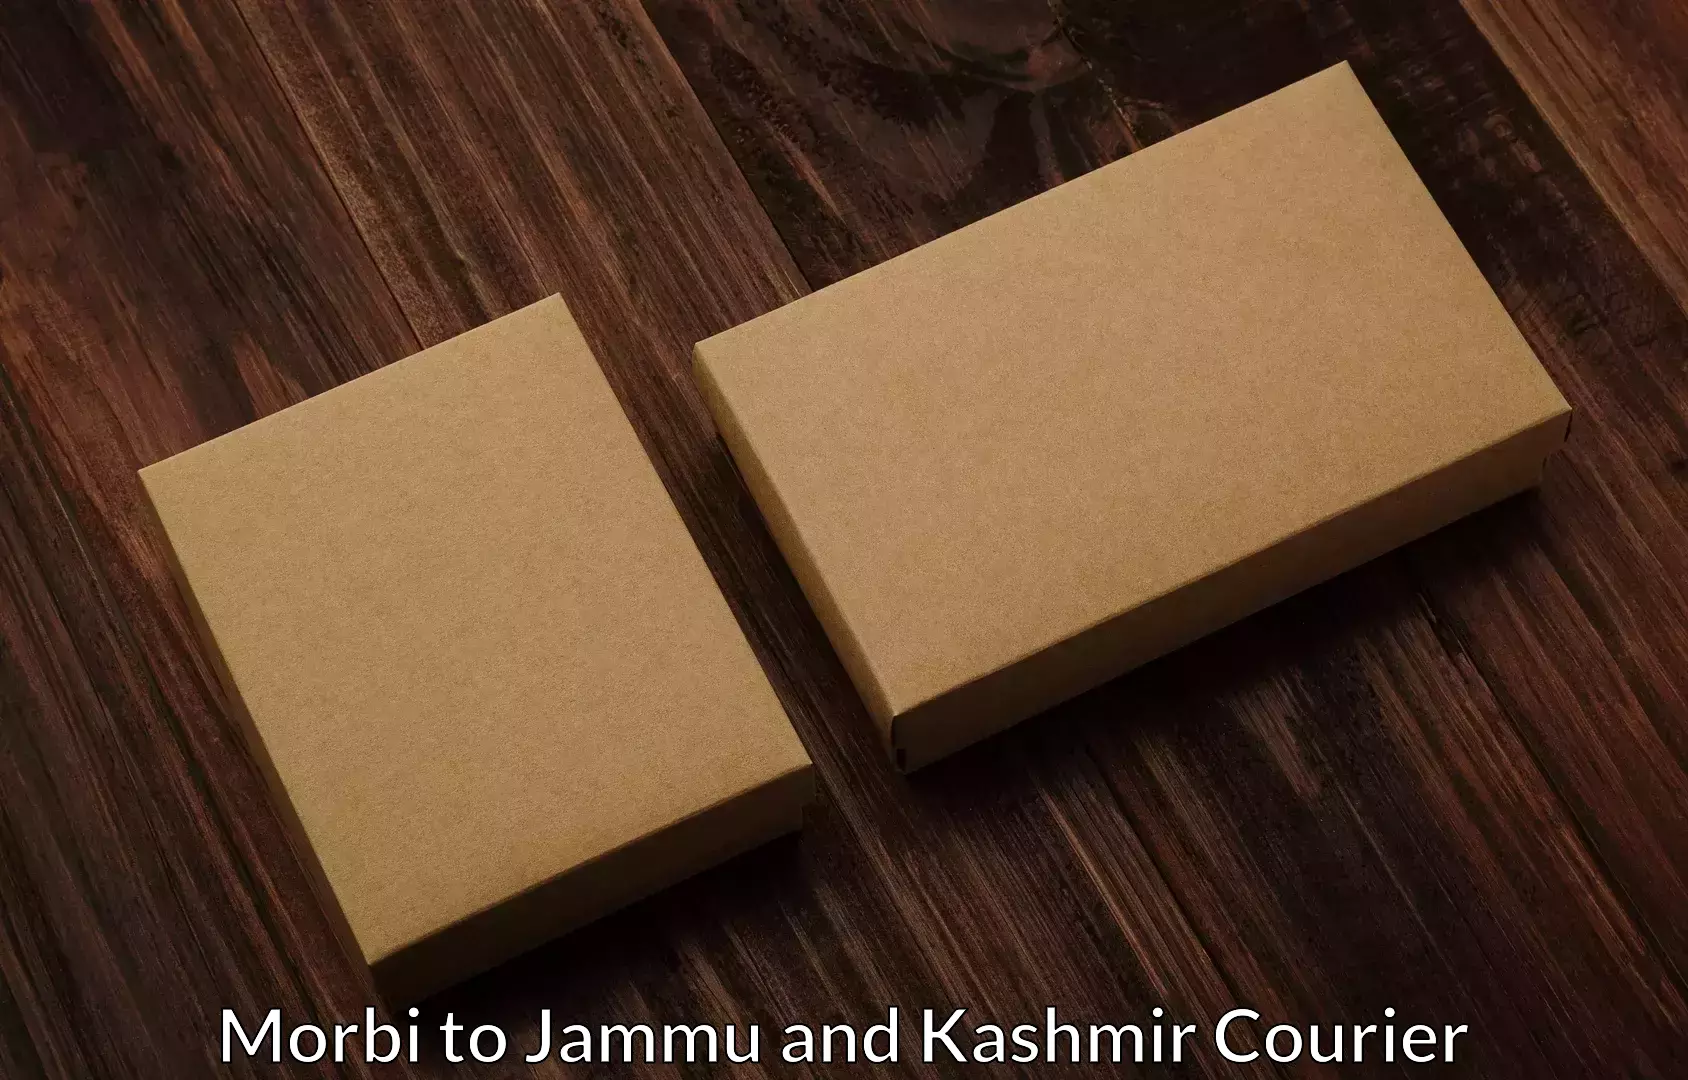 Home moving experts Morbi to Srinagar Kashmir